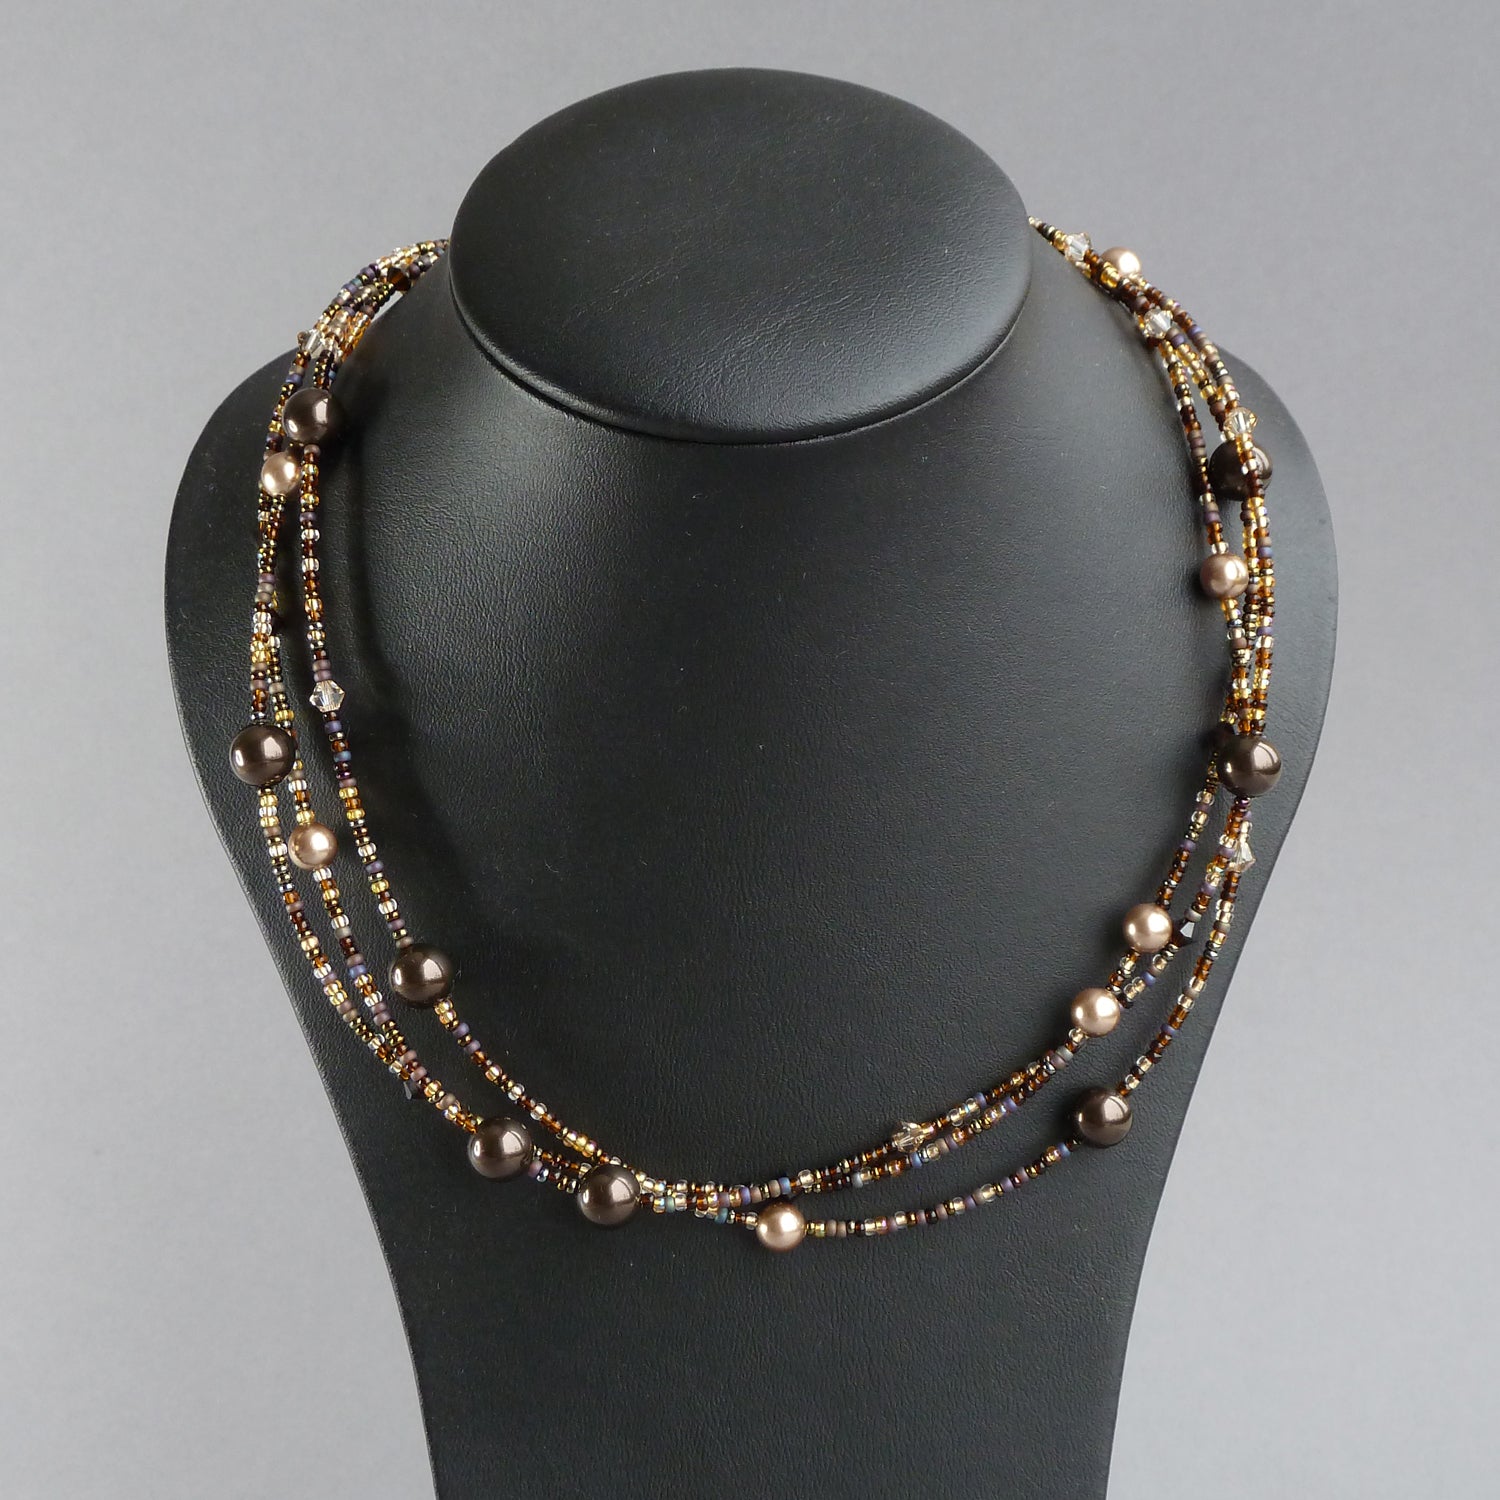 Beaded dark brown necklace